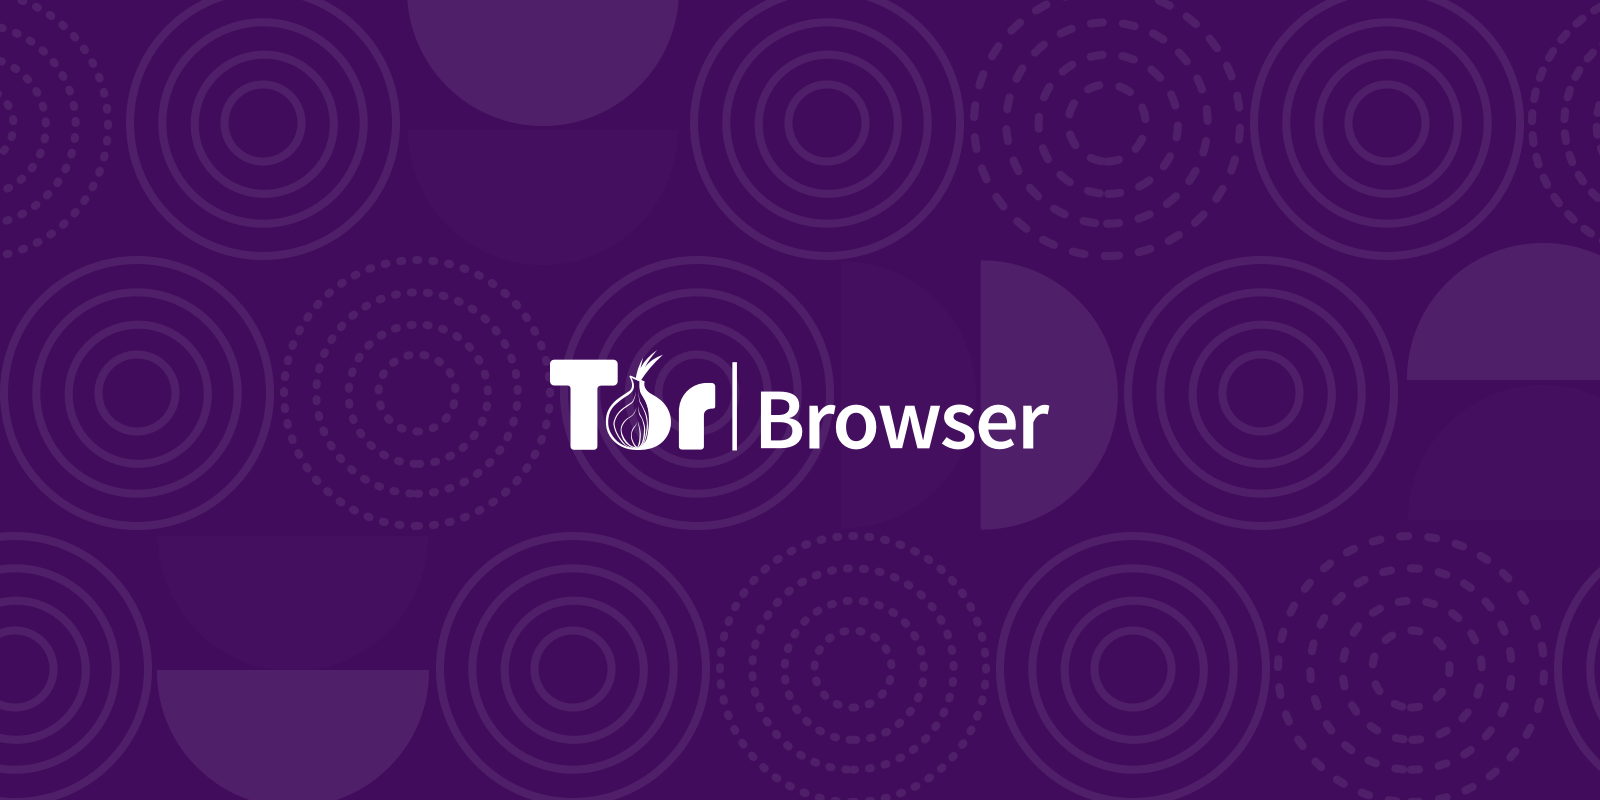 Download using tor browser mega подключиться к darknet mega